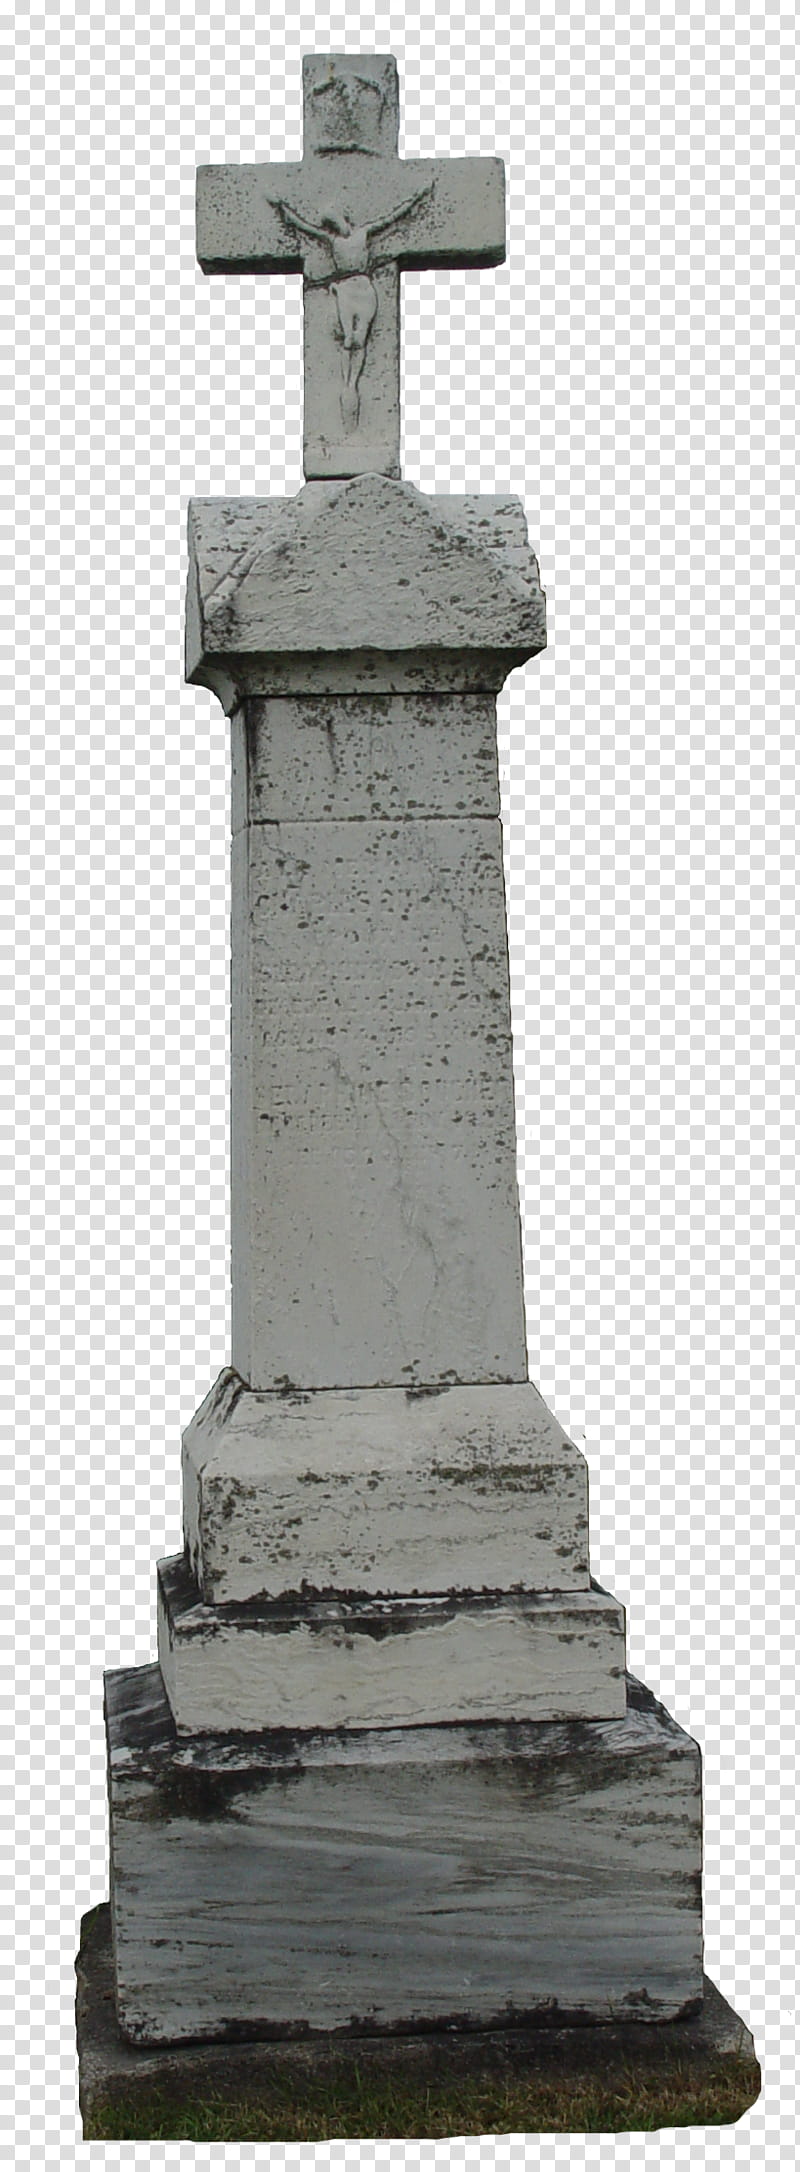 Tombstones, grey concrete structure transparent background PNG clipart